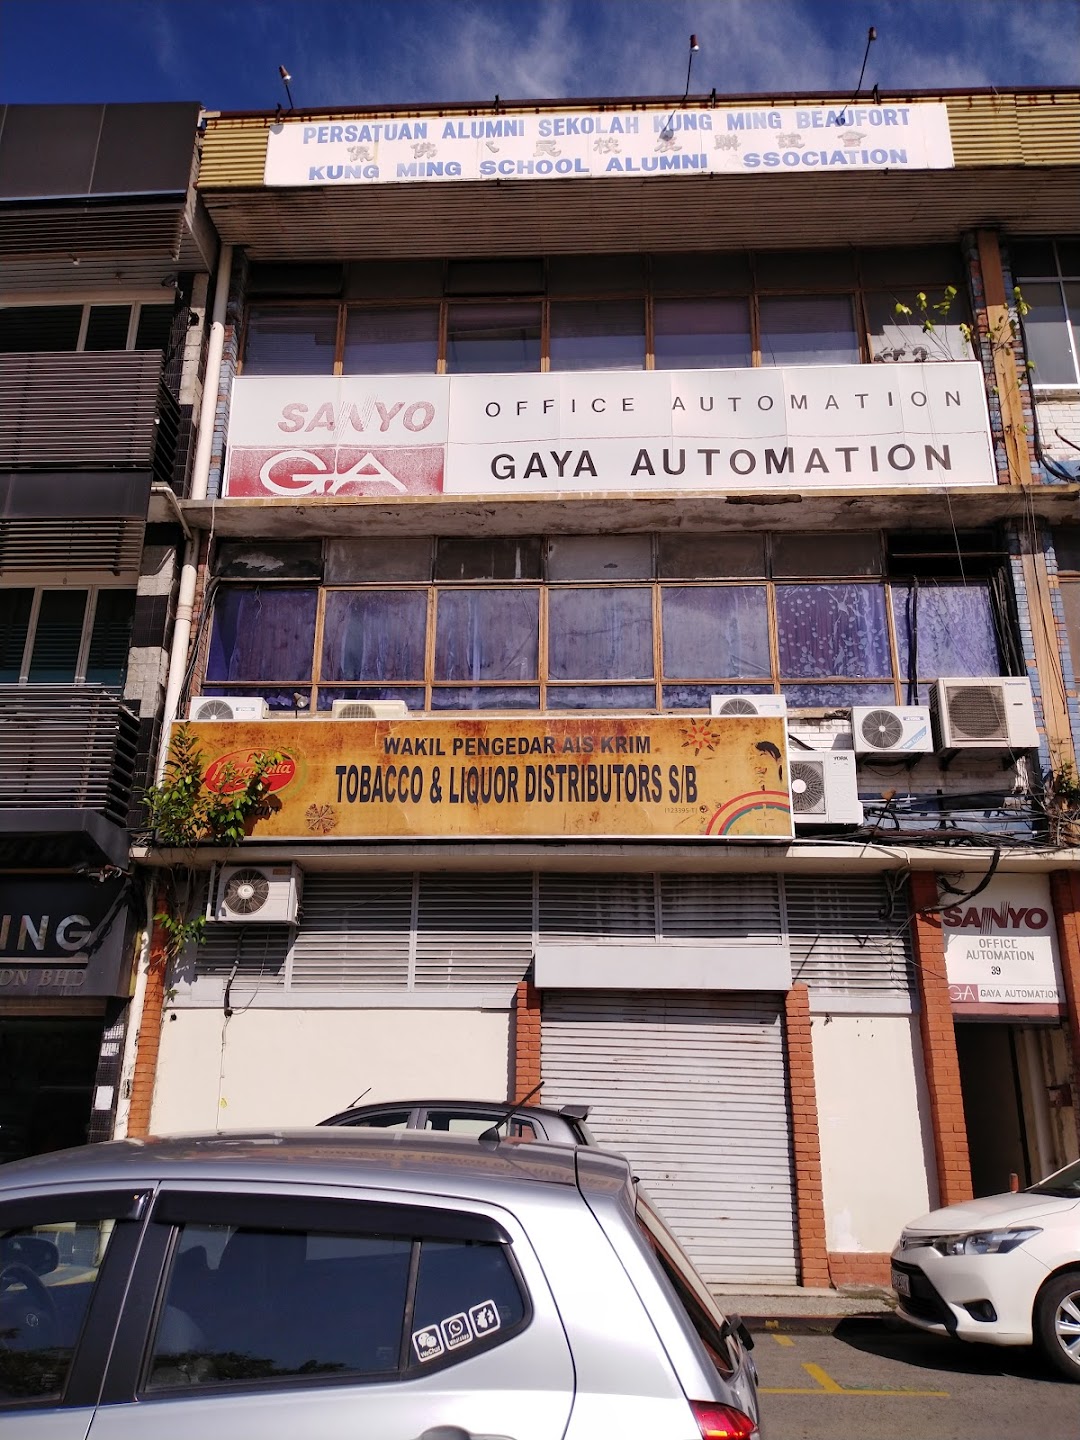 Gaya Automation